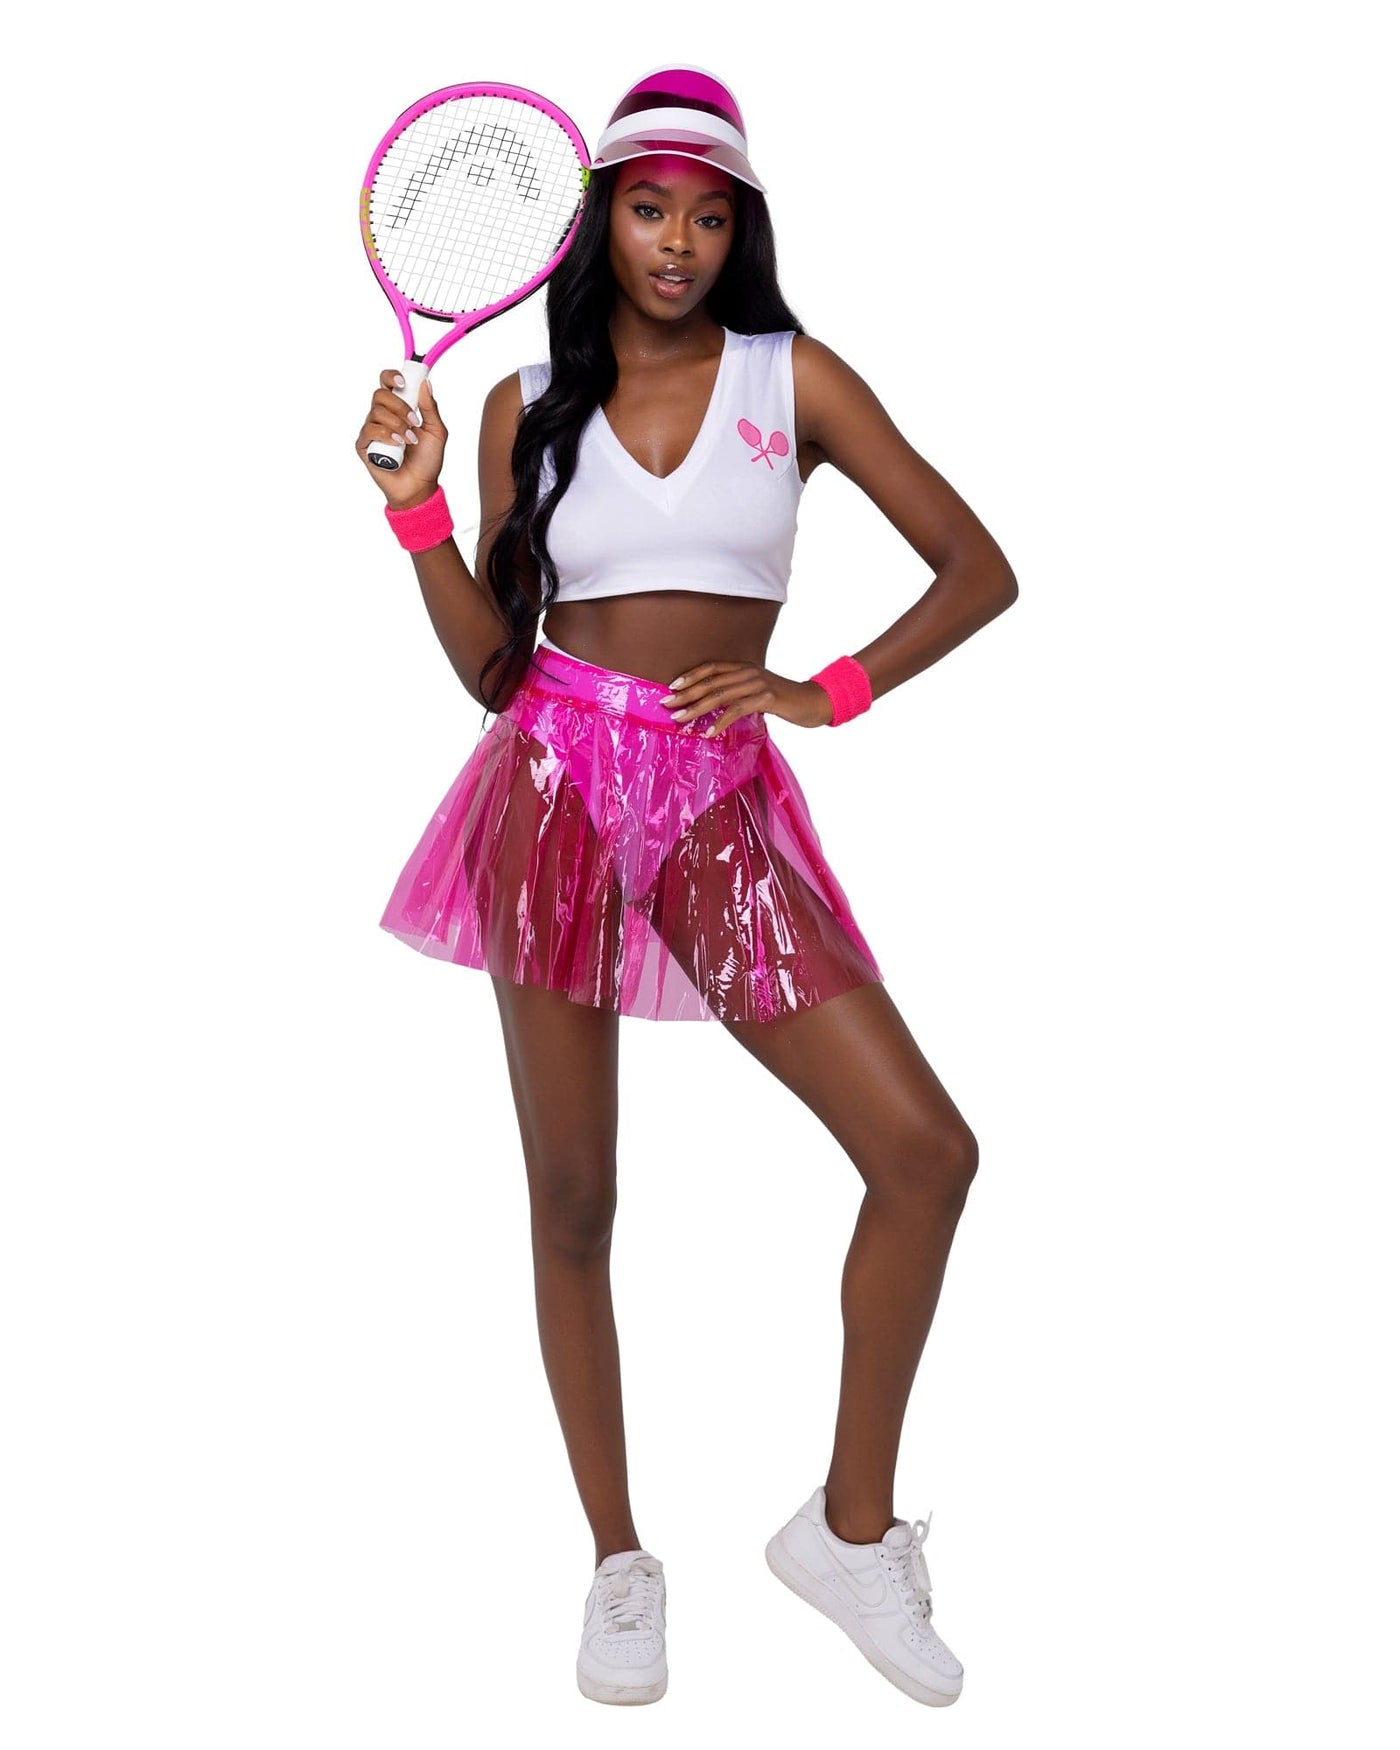 5pc. Tennis Court Hottie Women's Costume - For Love of Lingerie